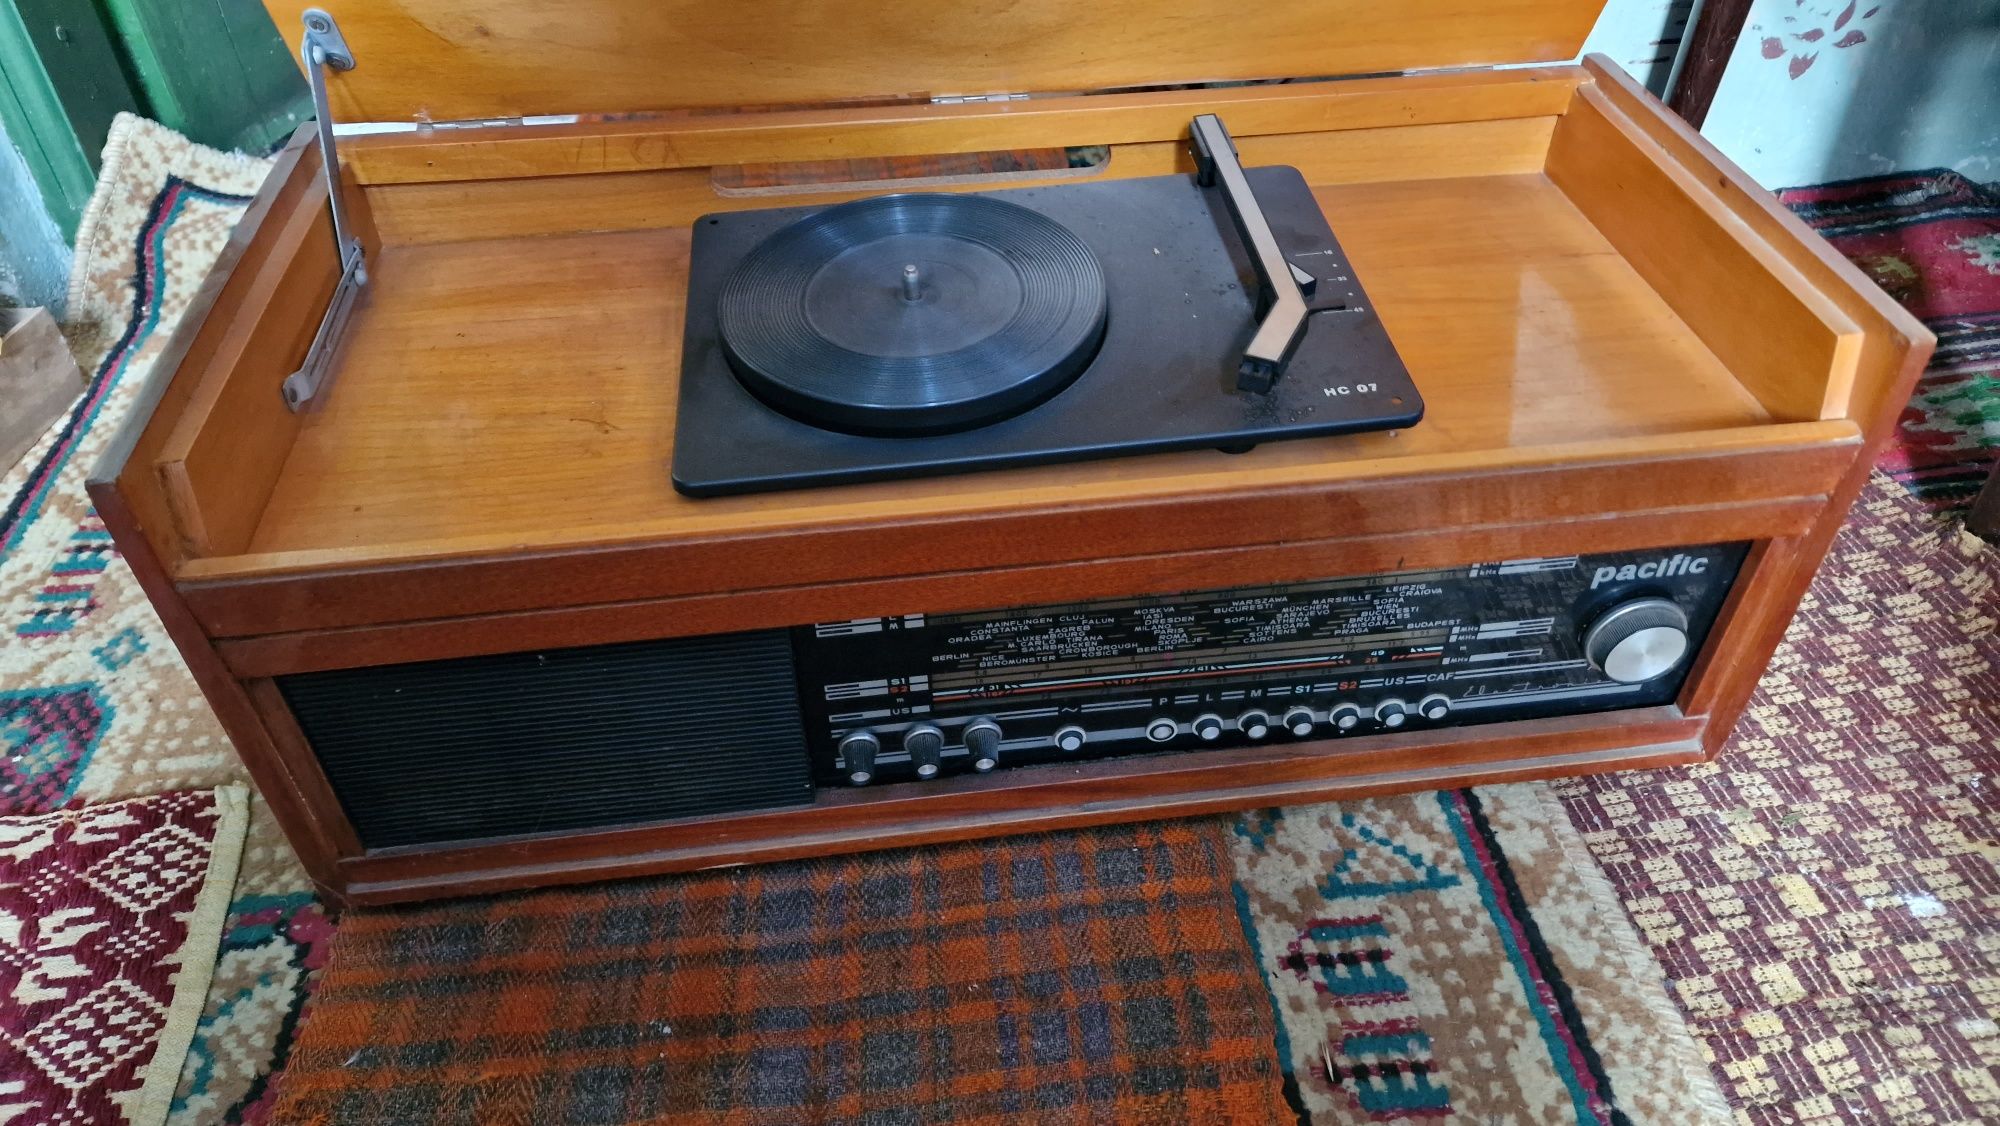 Aparat radio pacific electronica vintage